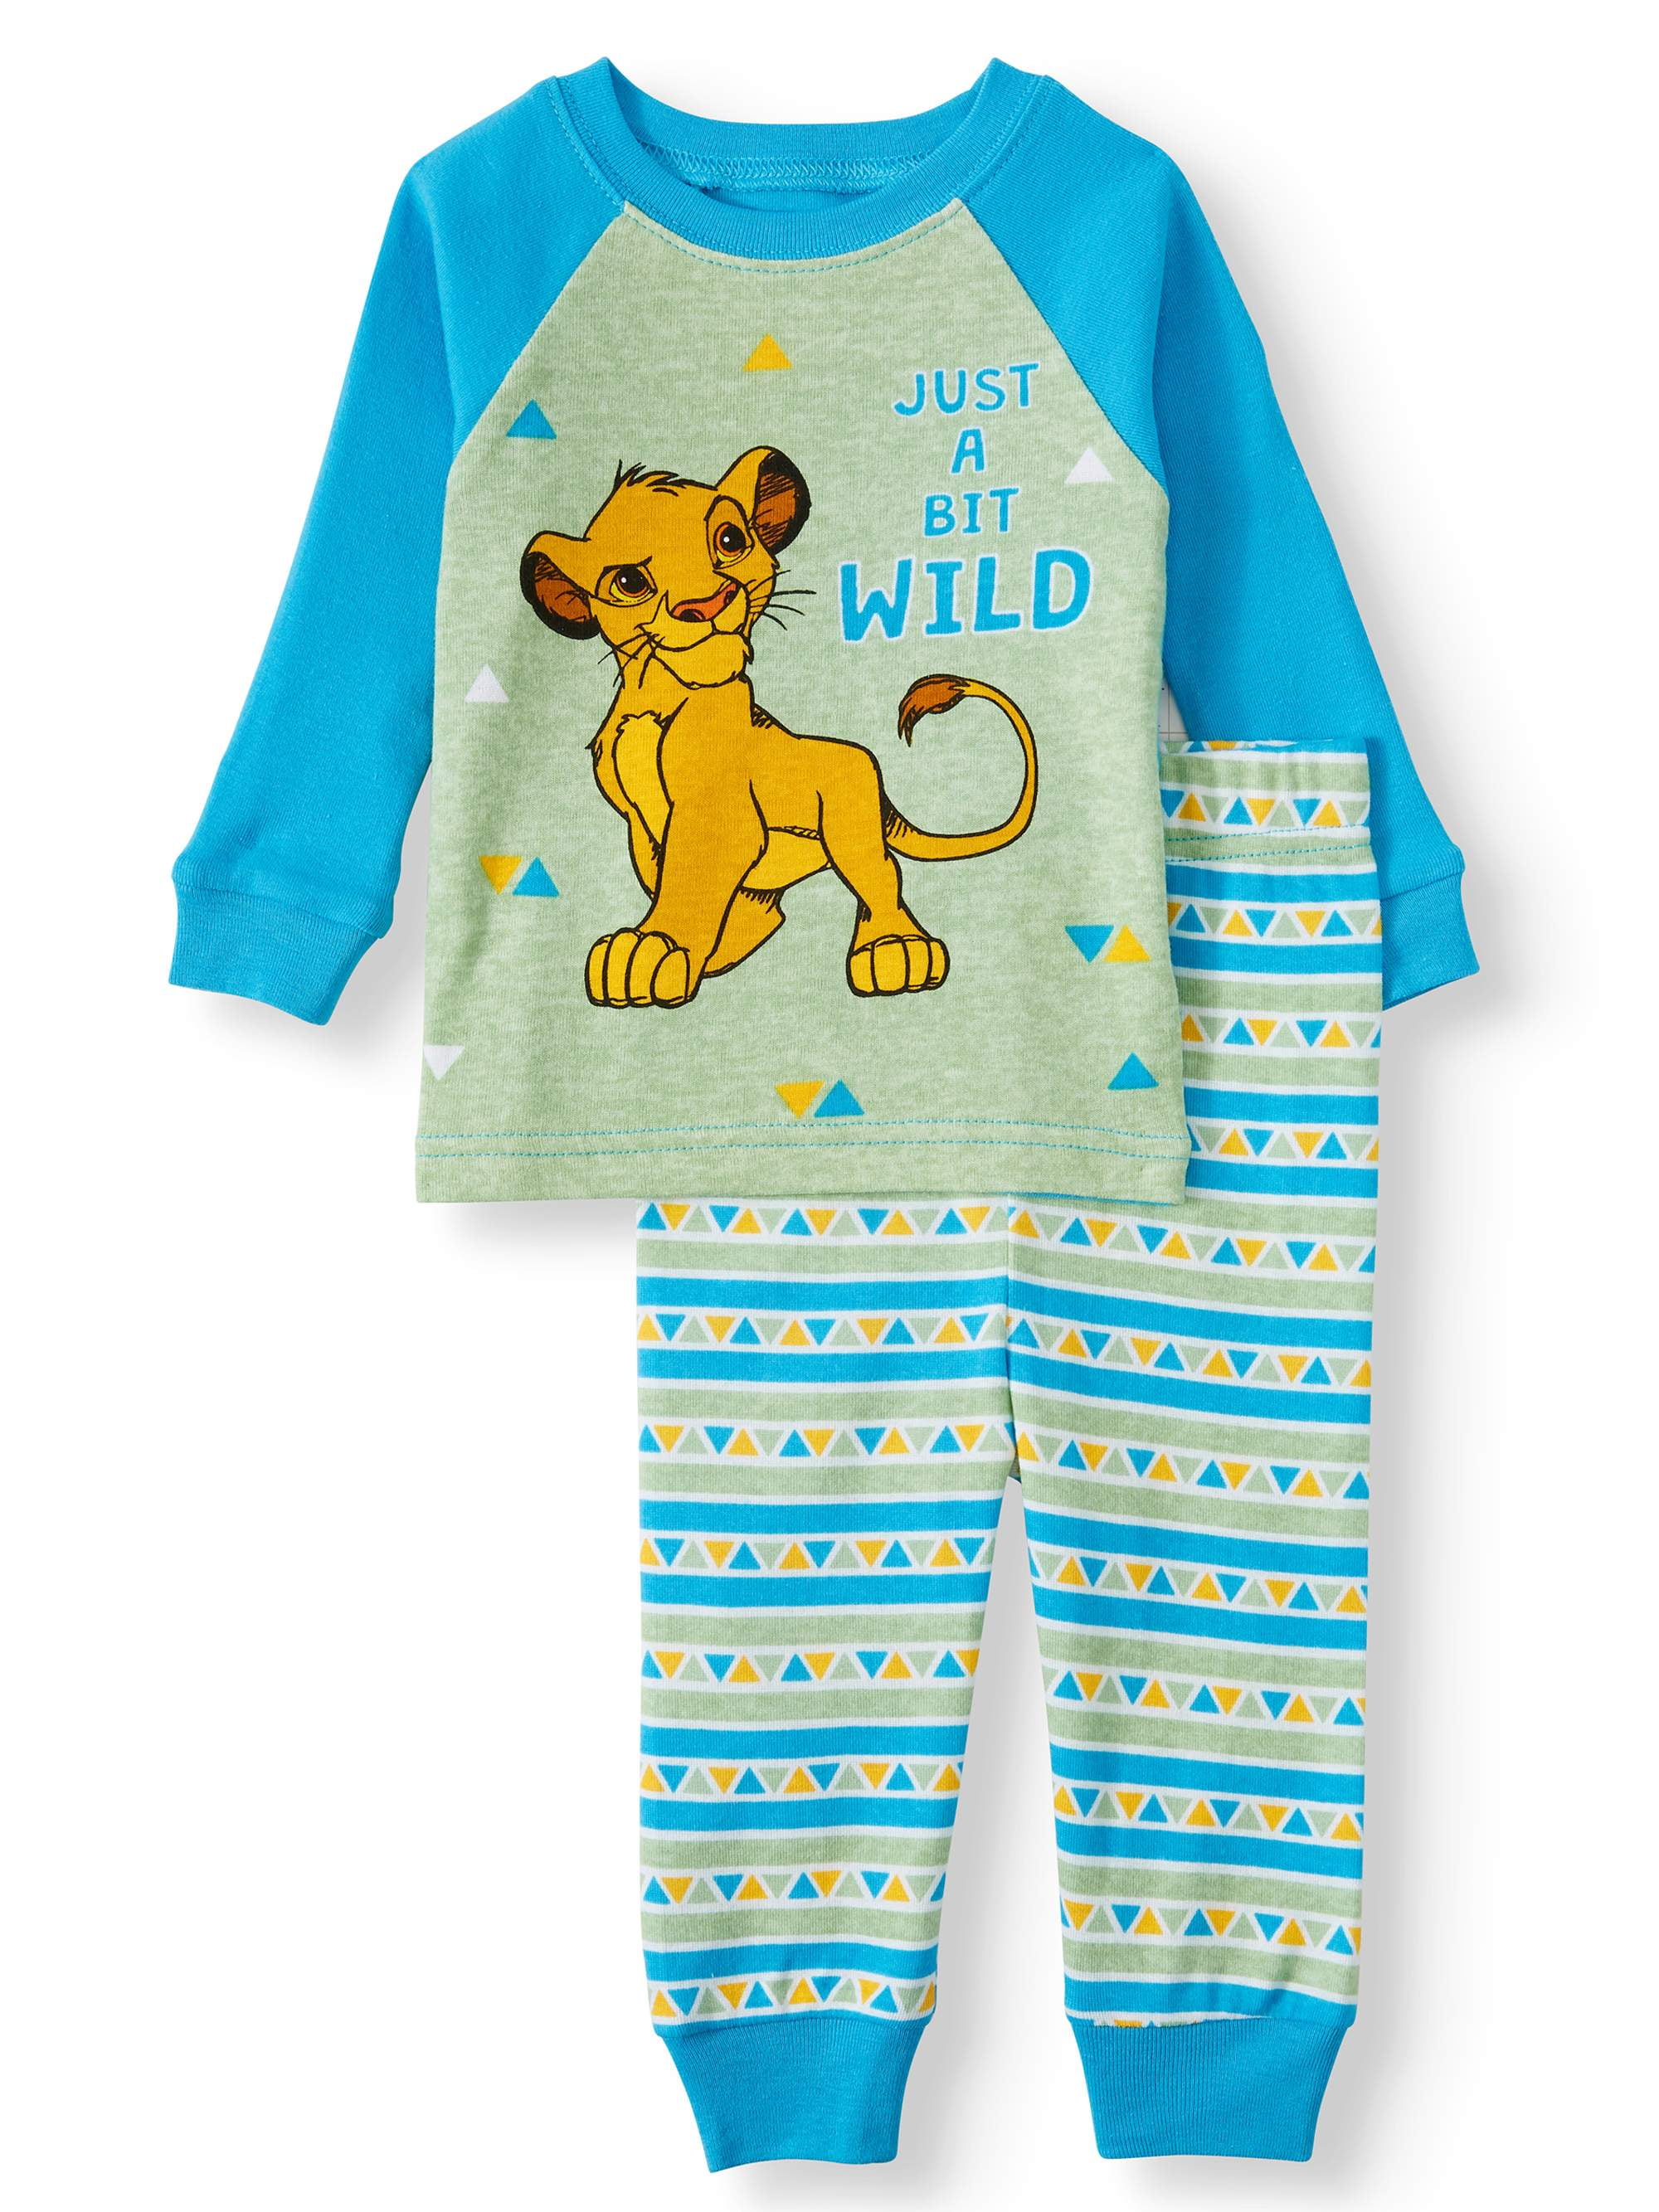 speer Dusver venijn Lion King Baby Boy Snug Fit Cotton Long Sleeve Pajamas, 2-Piece Set -  Walmart.com